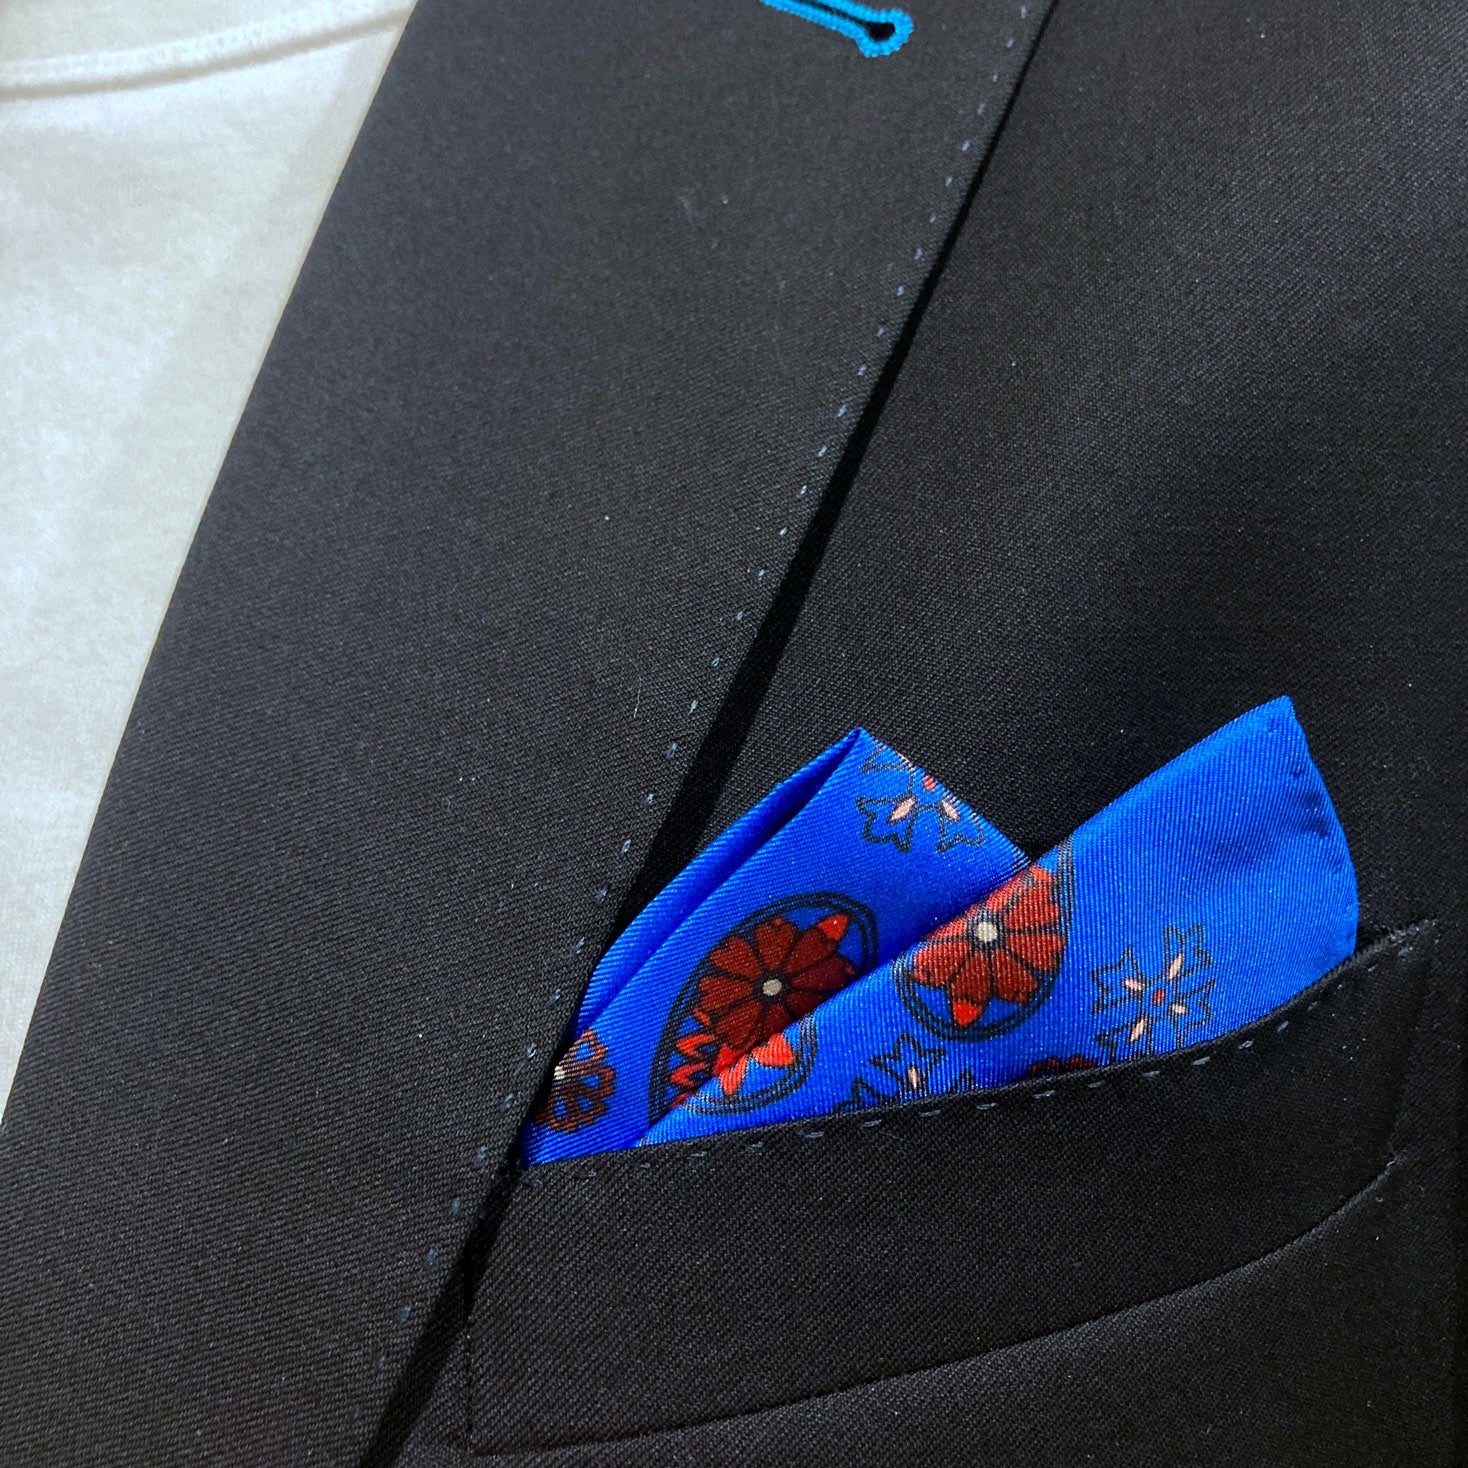 Close-up of 'Marrakesh' silk pocket square in breast pocket of dark suit jacket.